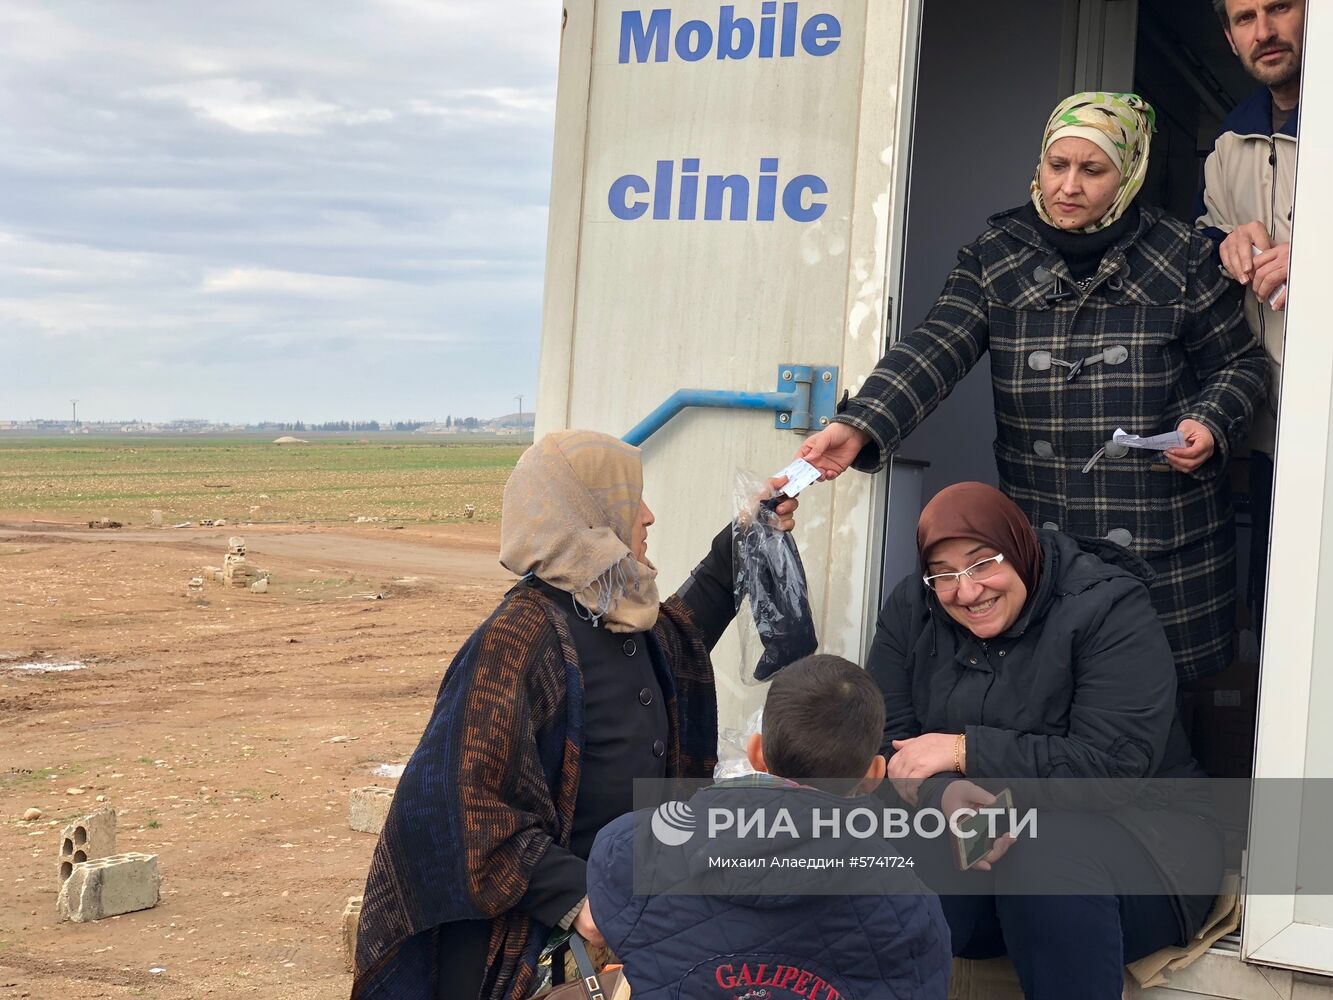 Беженцы покидают захваченную террористами провинцию Идлиб